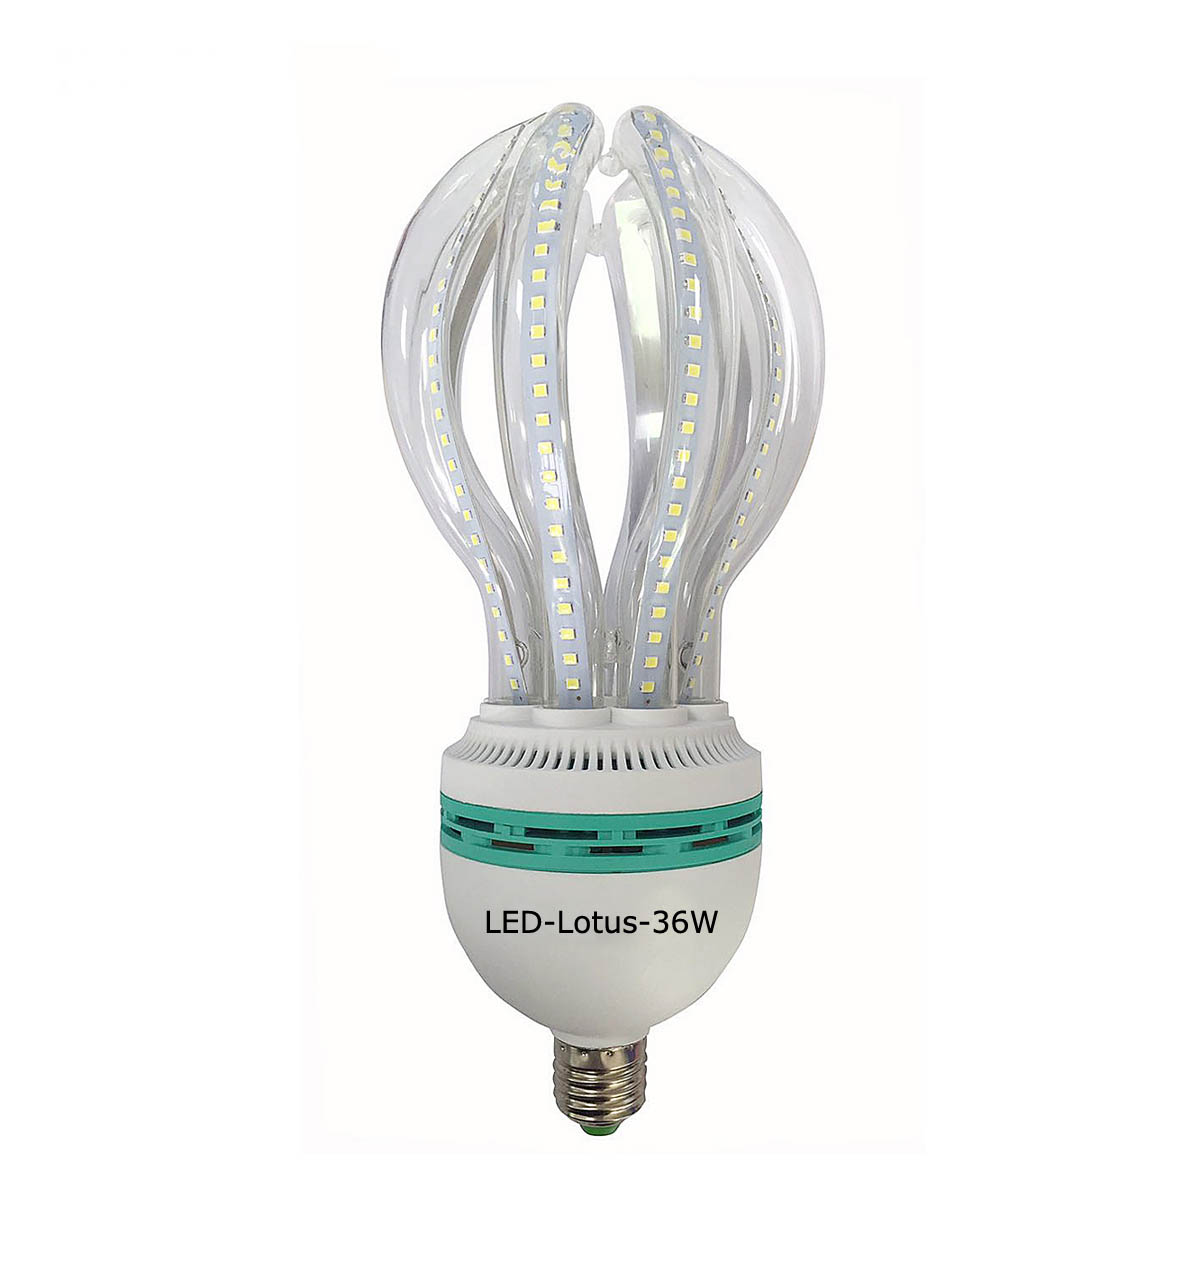 LED corn lotus lamp 36W